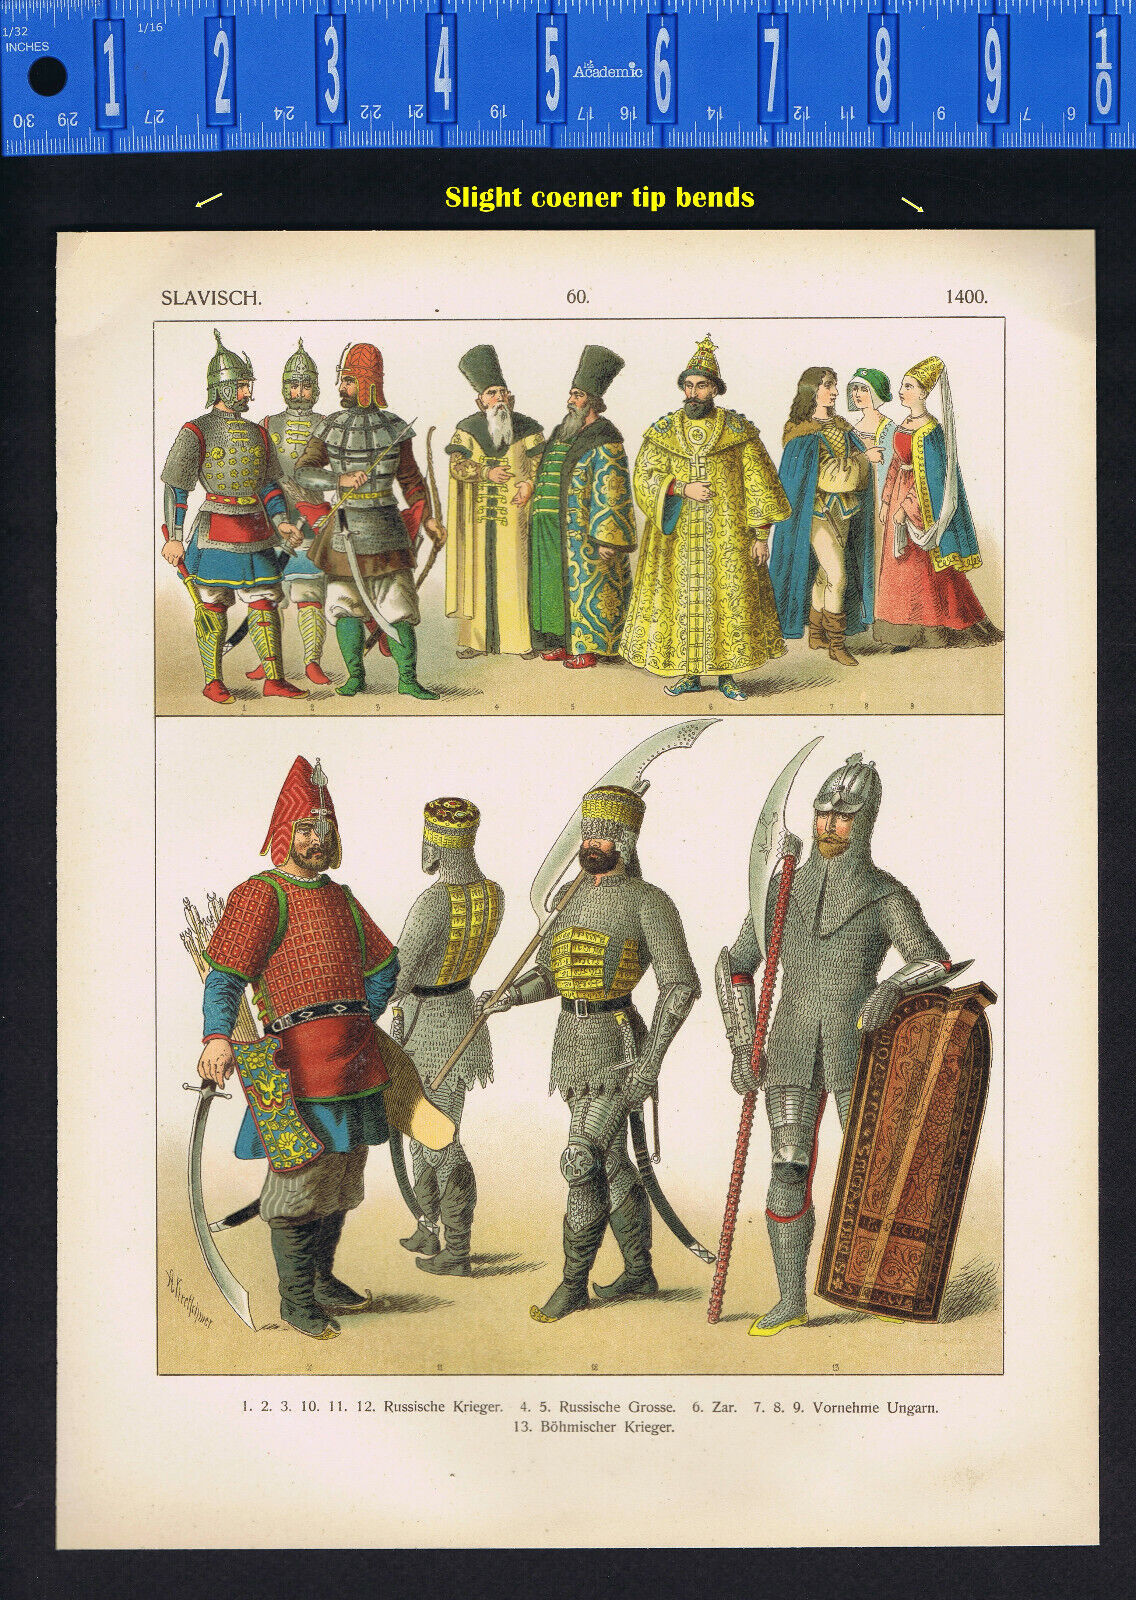 1400 Slavish -Warriors - Tsar - Hungarians - Bohemians -1882 Chromolithograph